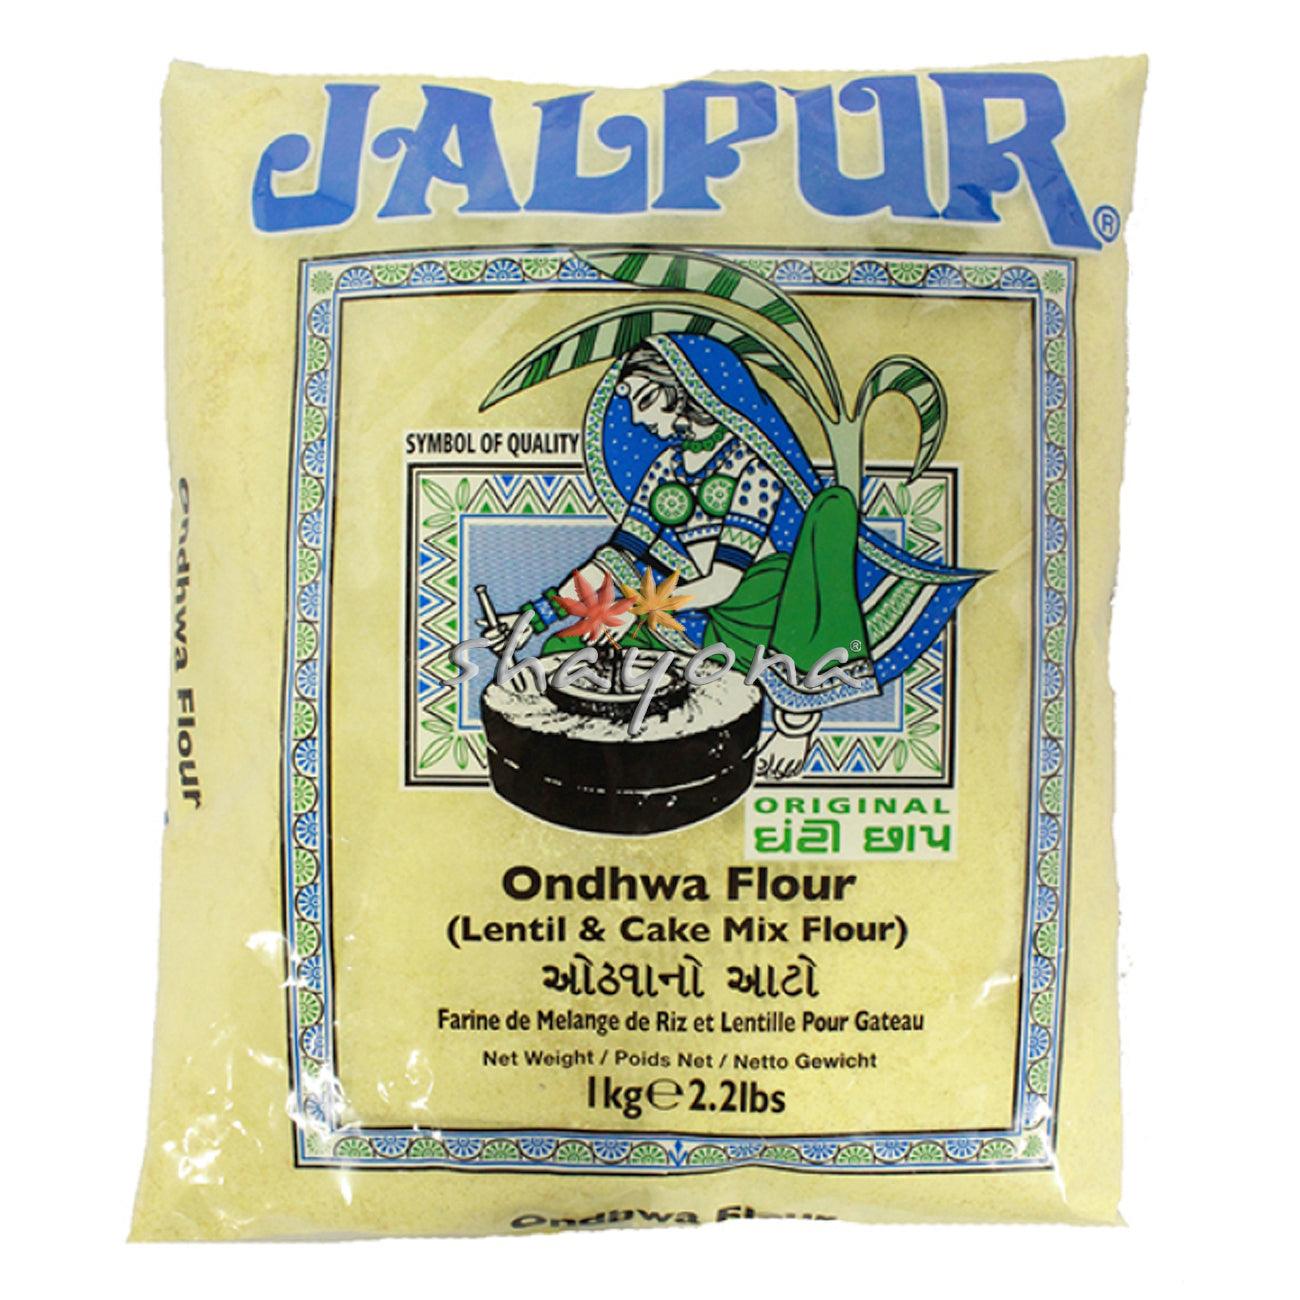 Jalpur Ondhwa Flour - Shayona UK